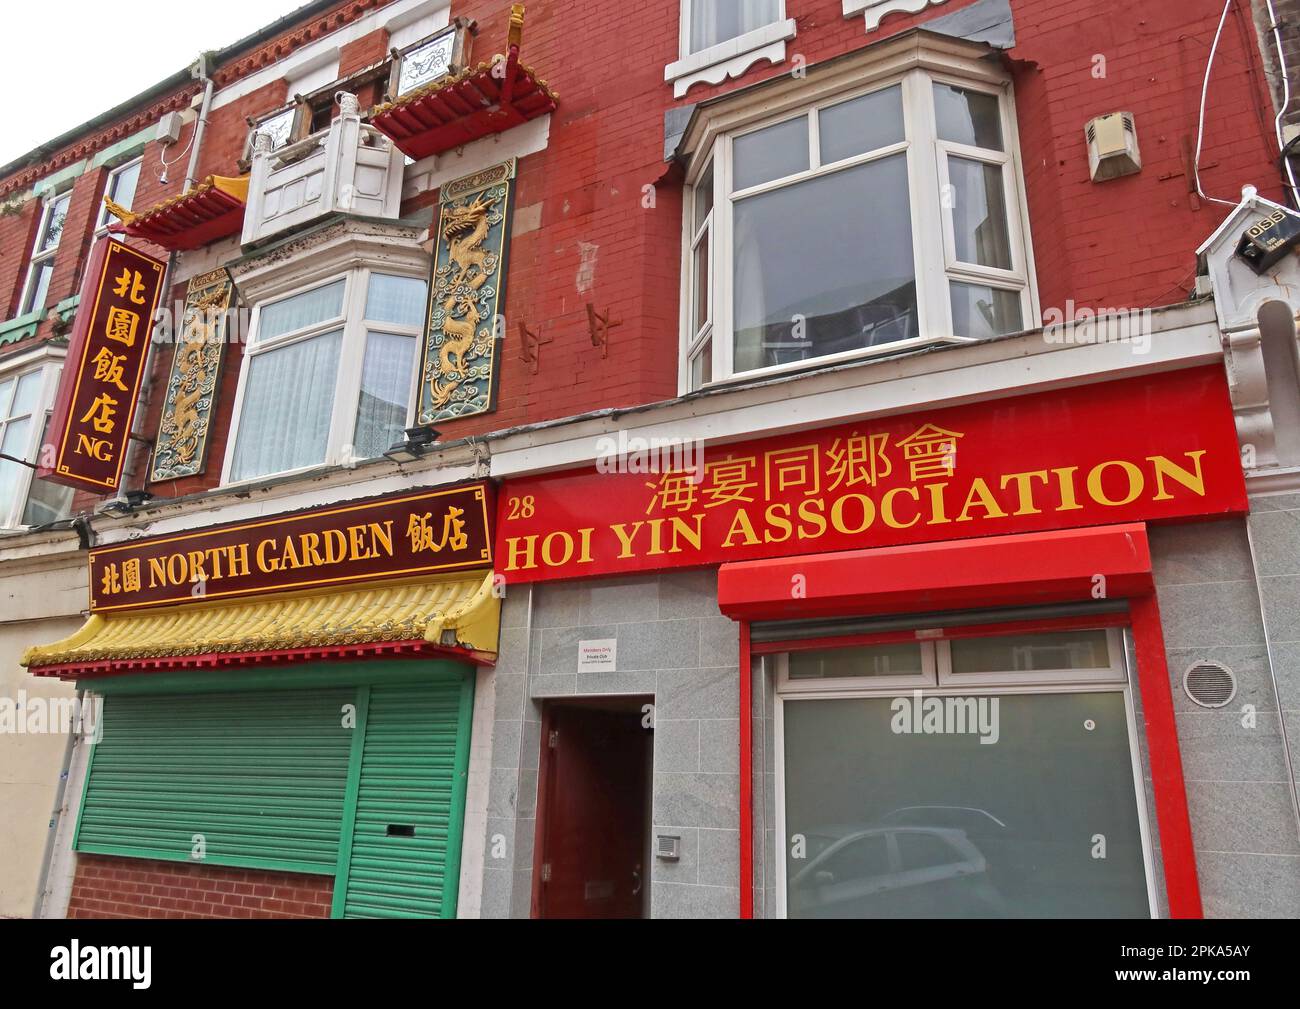 Chinatown Liverpool - Hoi Yin Association & North Garden Chinese restaurant, 28 Nelson St, Liverpool, Merseyside, England, UK, L1 5DN Stock Photo